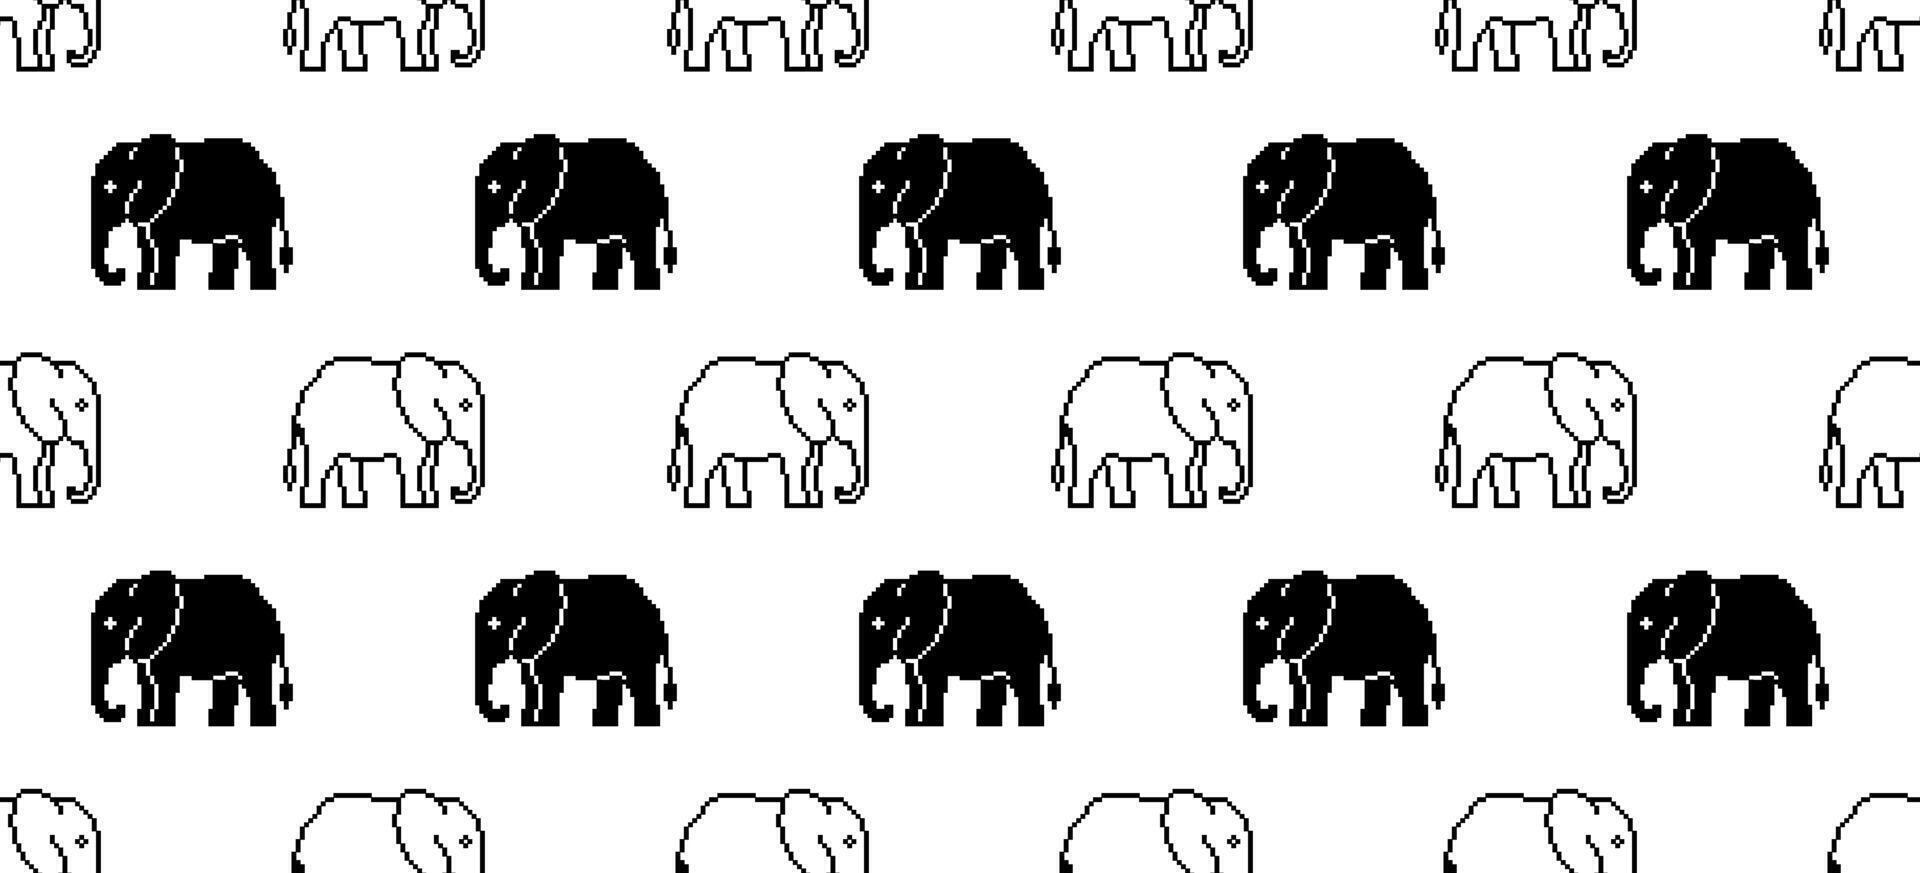 black white pixel art elephant seamless pattern vector